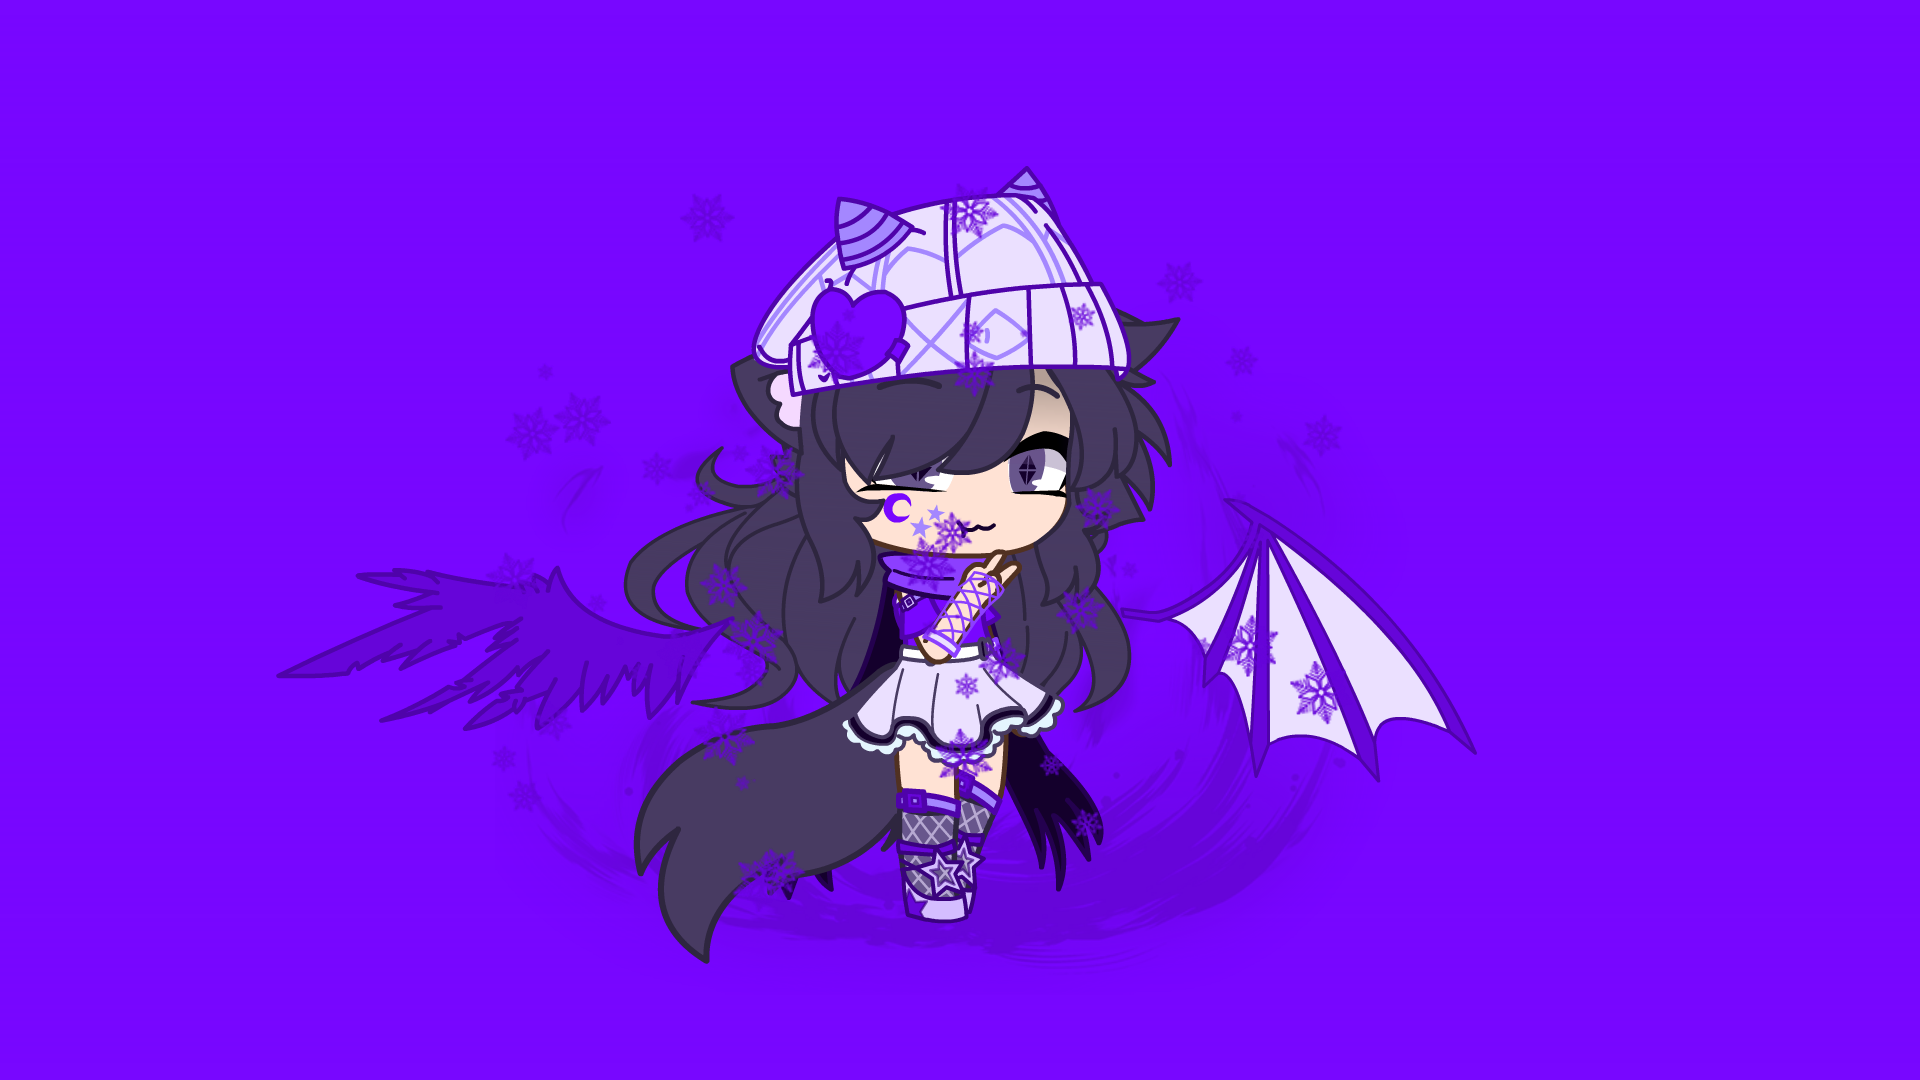 🖤Dark oc gacha club💜  Character outfits, Purple and black, Purple